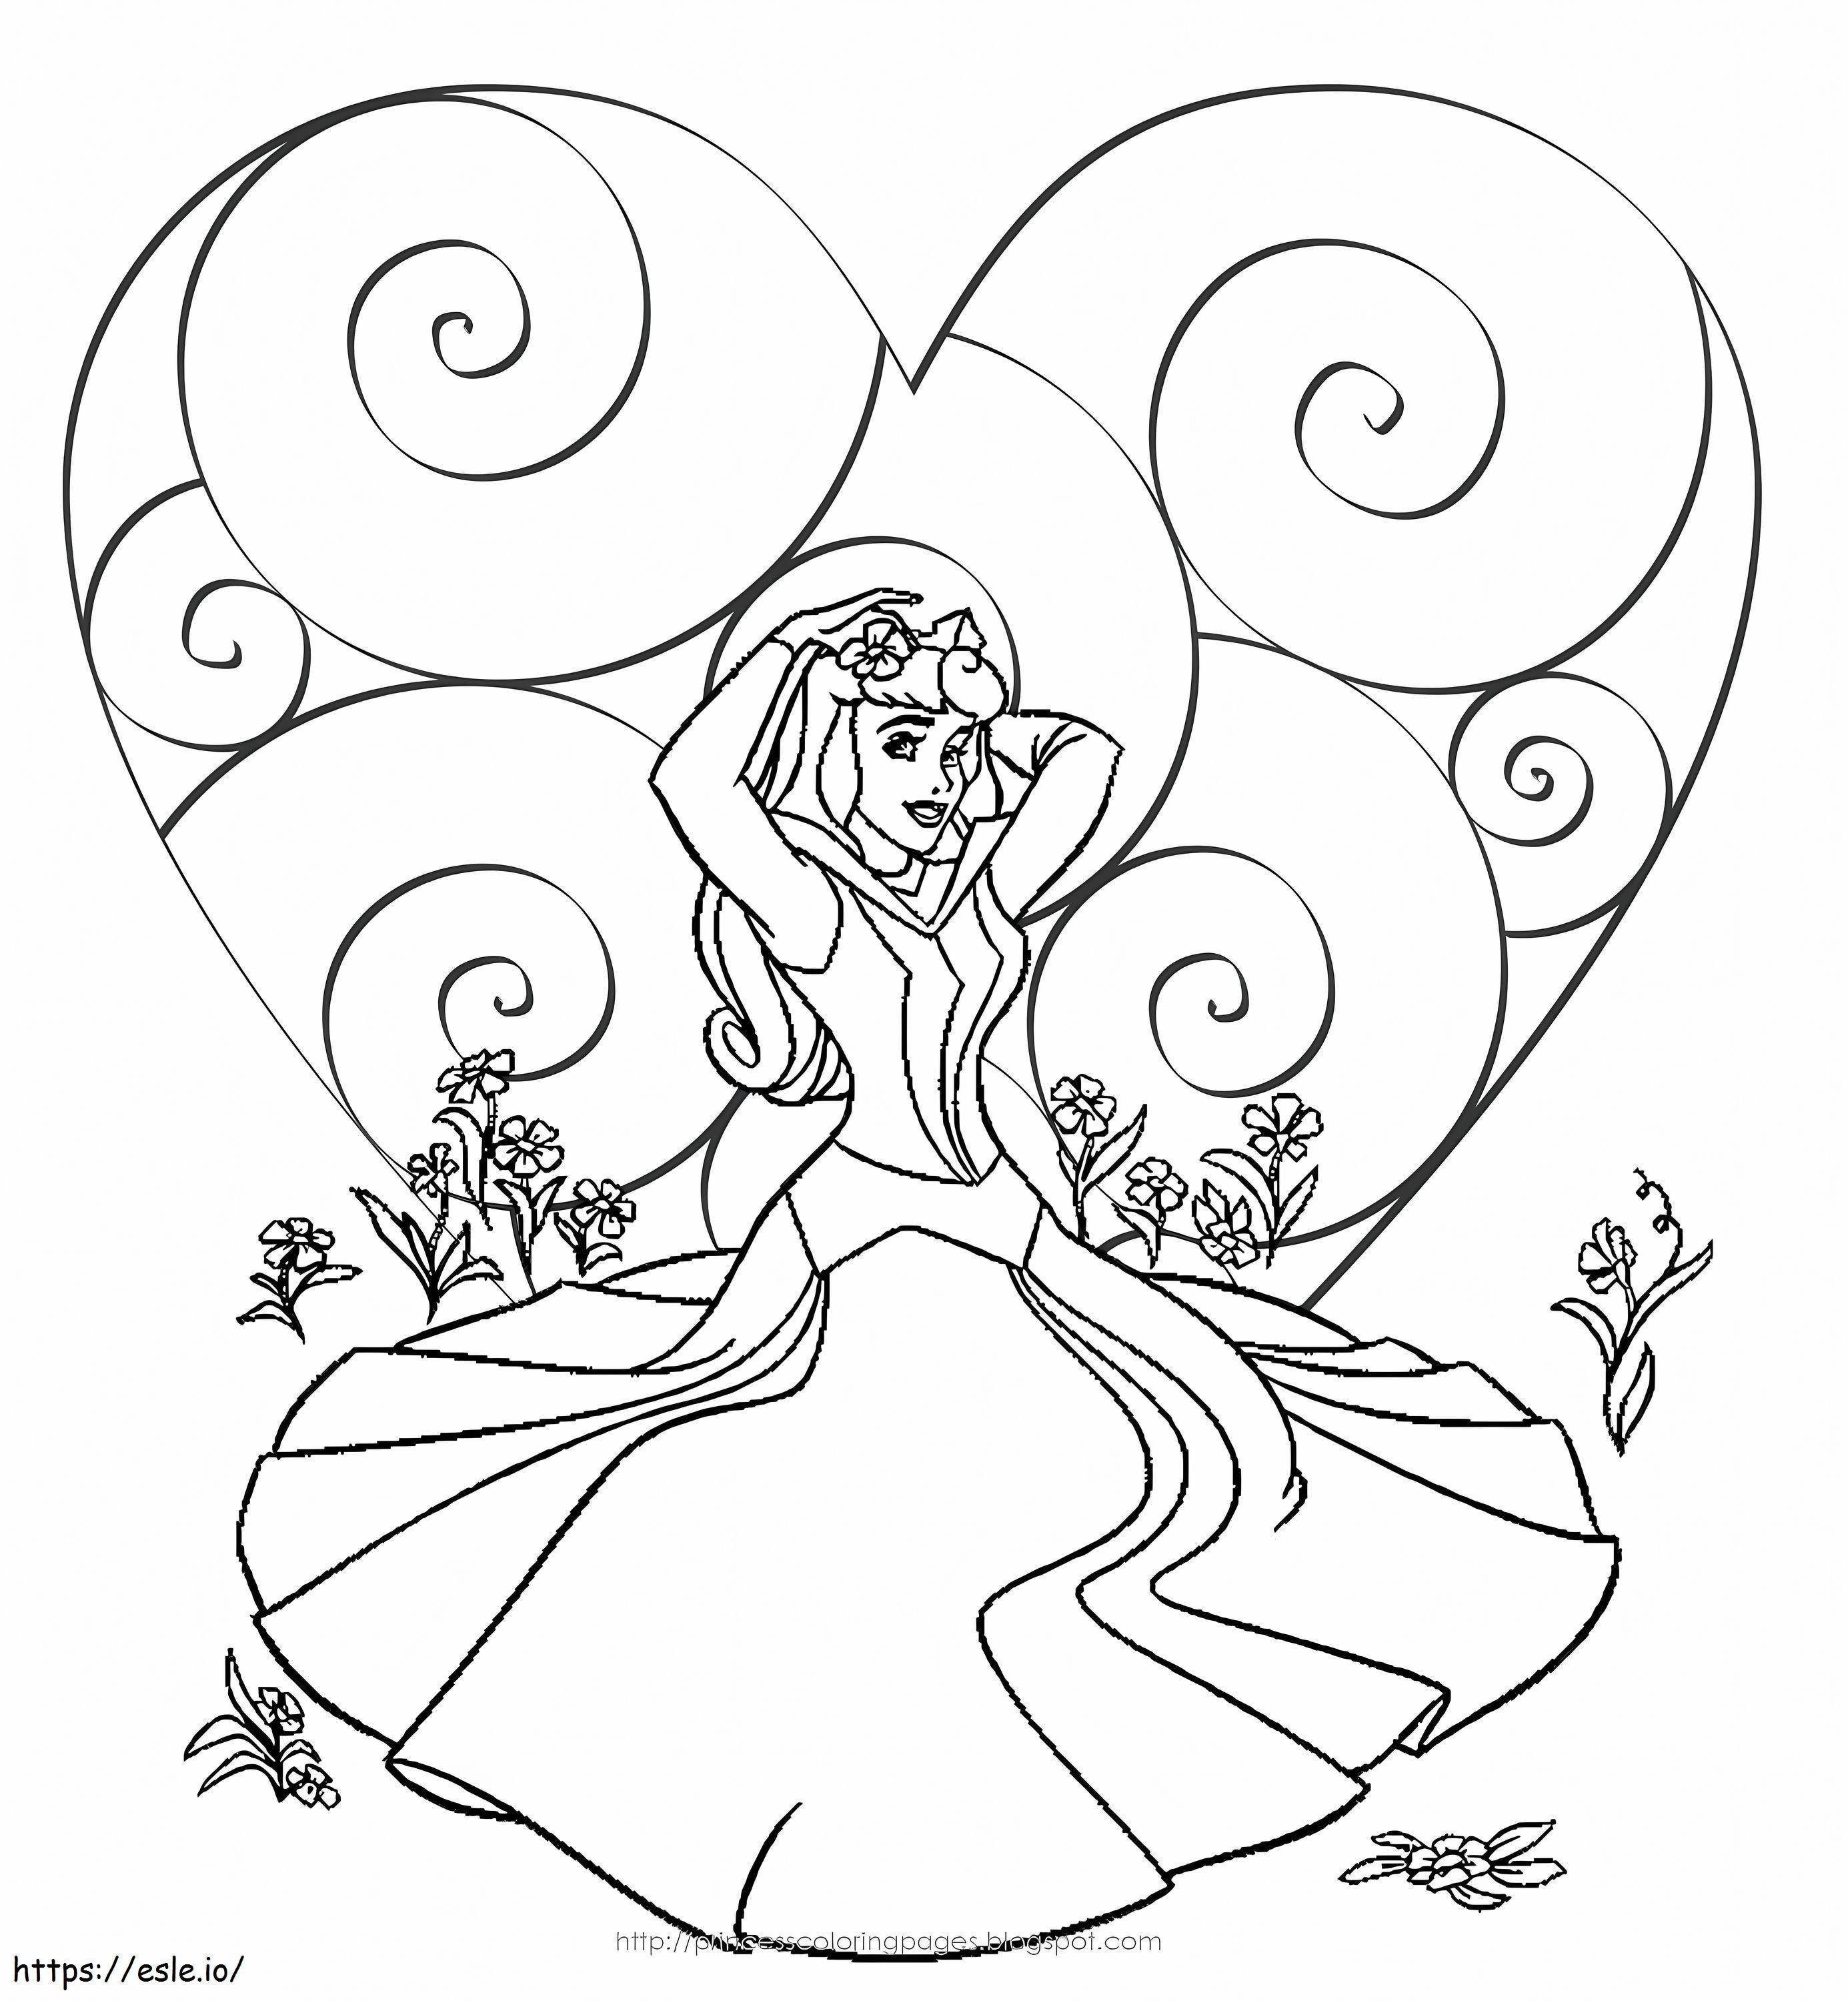 Princesa Disney dos Namorados para colorir